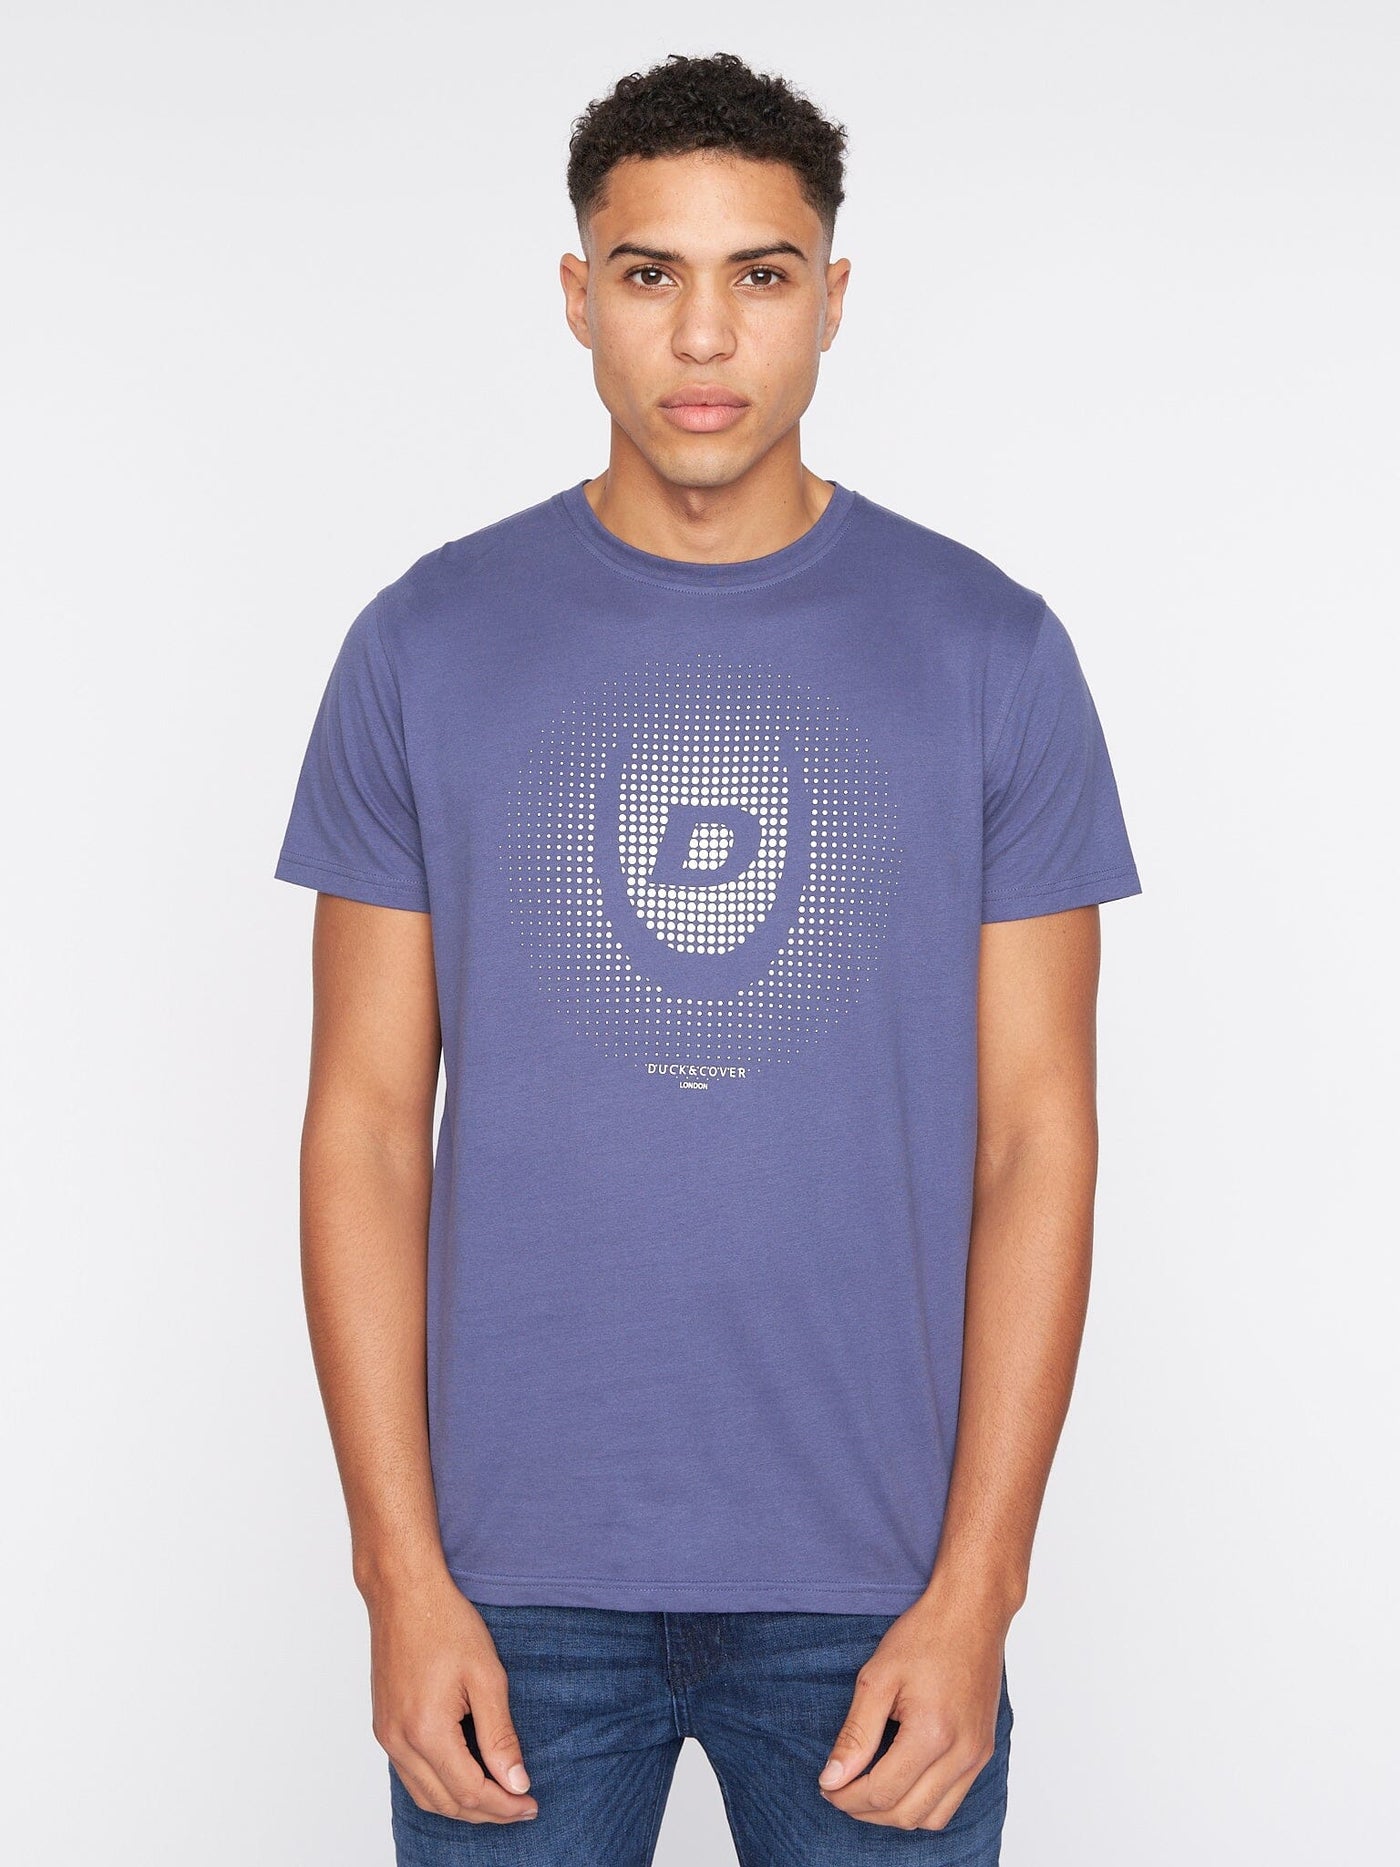 Pulsea T-Shirt Denim Blue